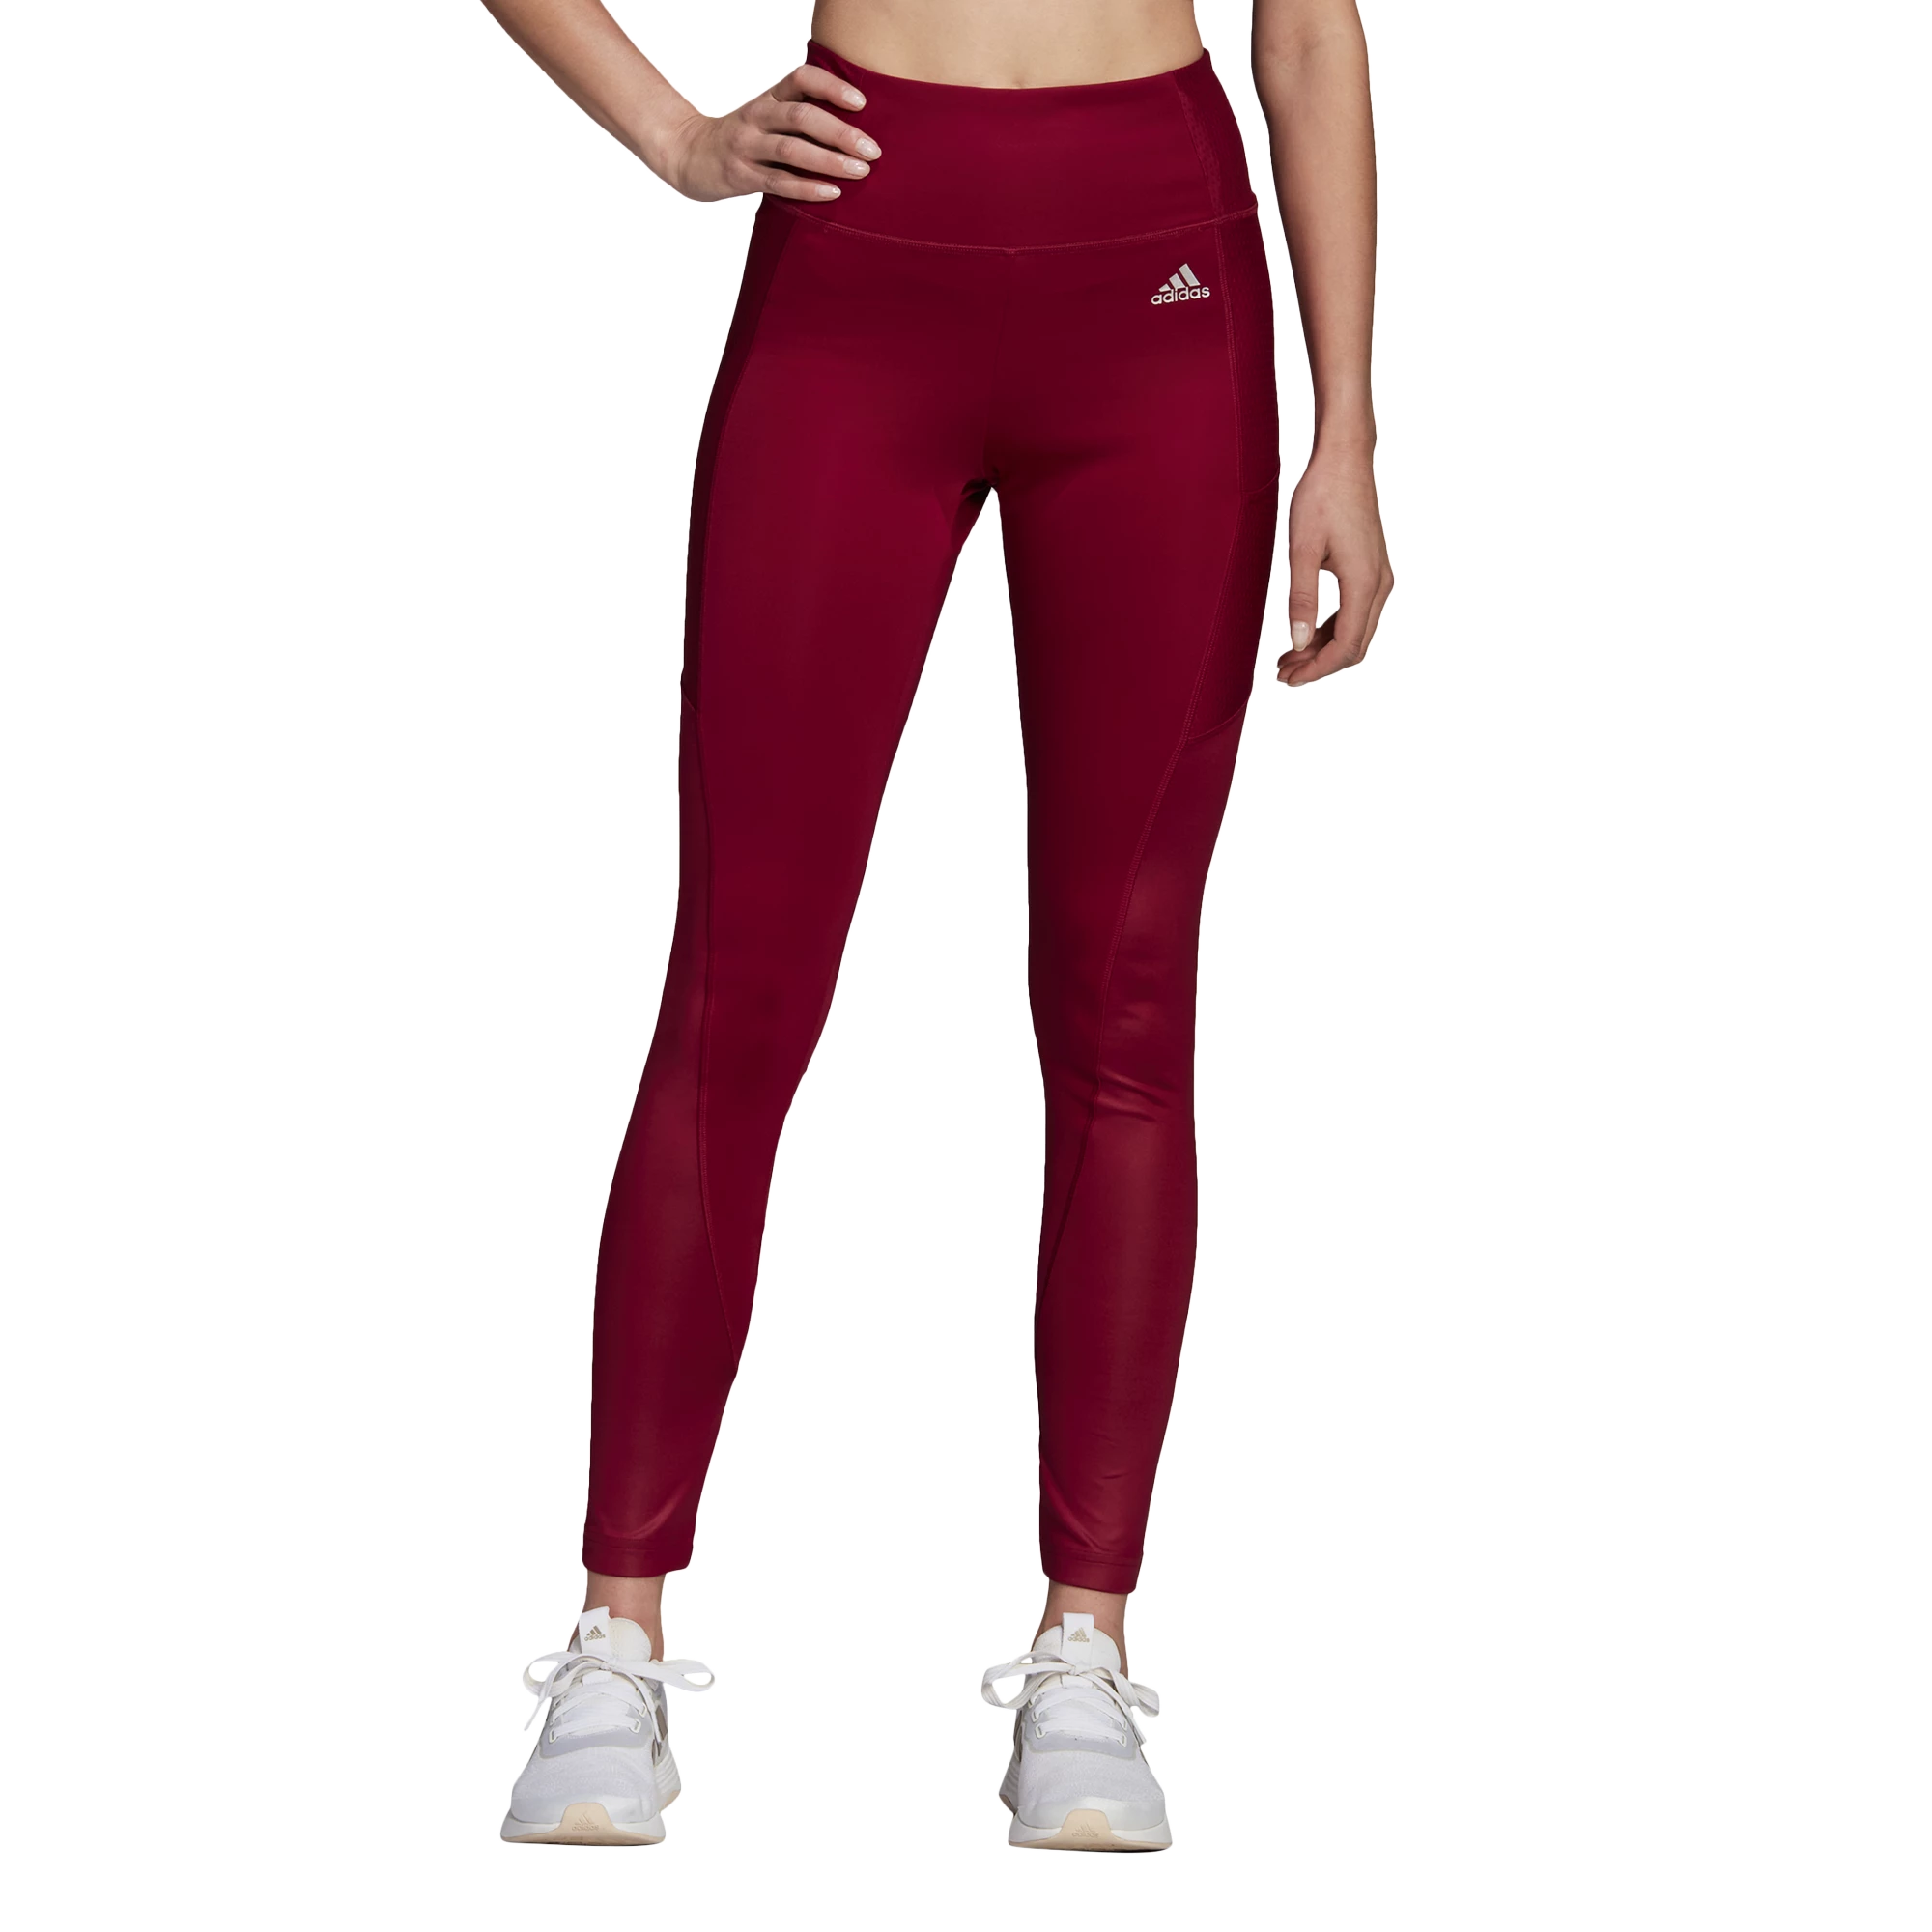 Women's leggings adidas x Zoe Saldana sport Tights Legacy Burgundy